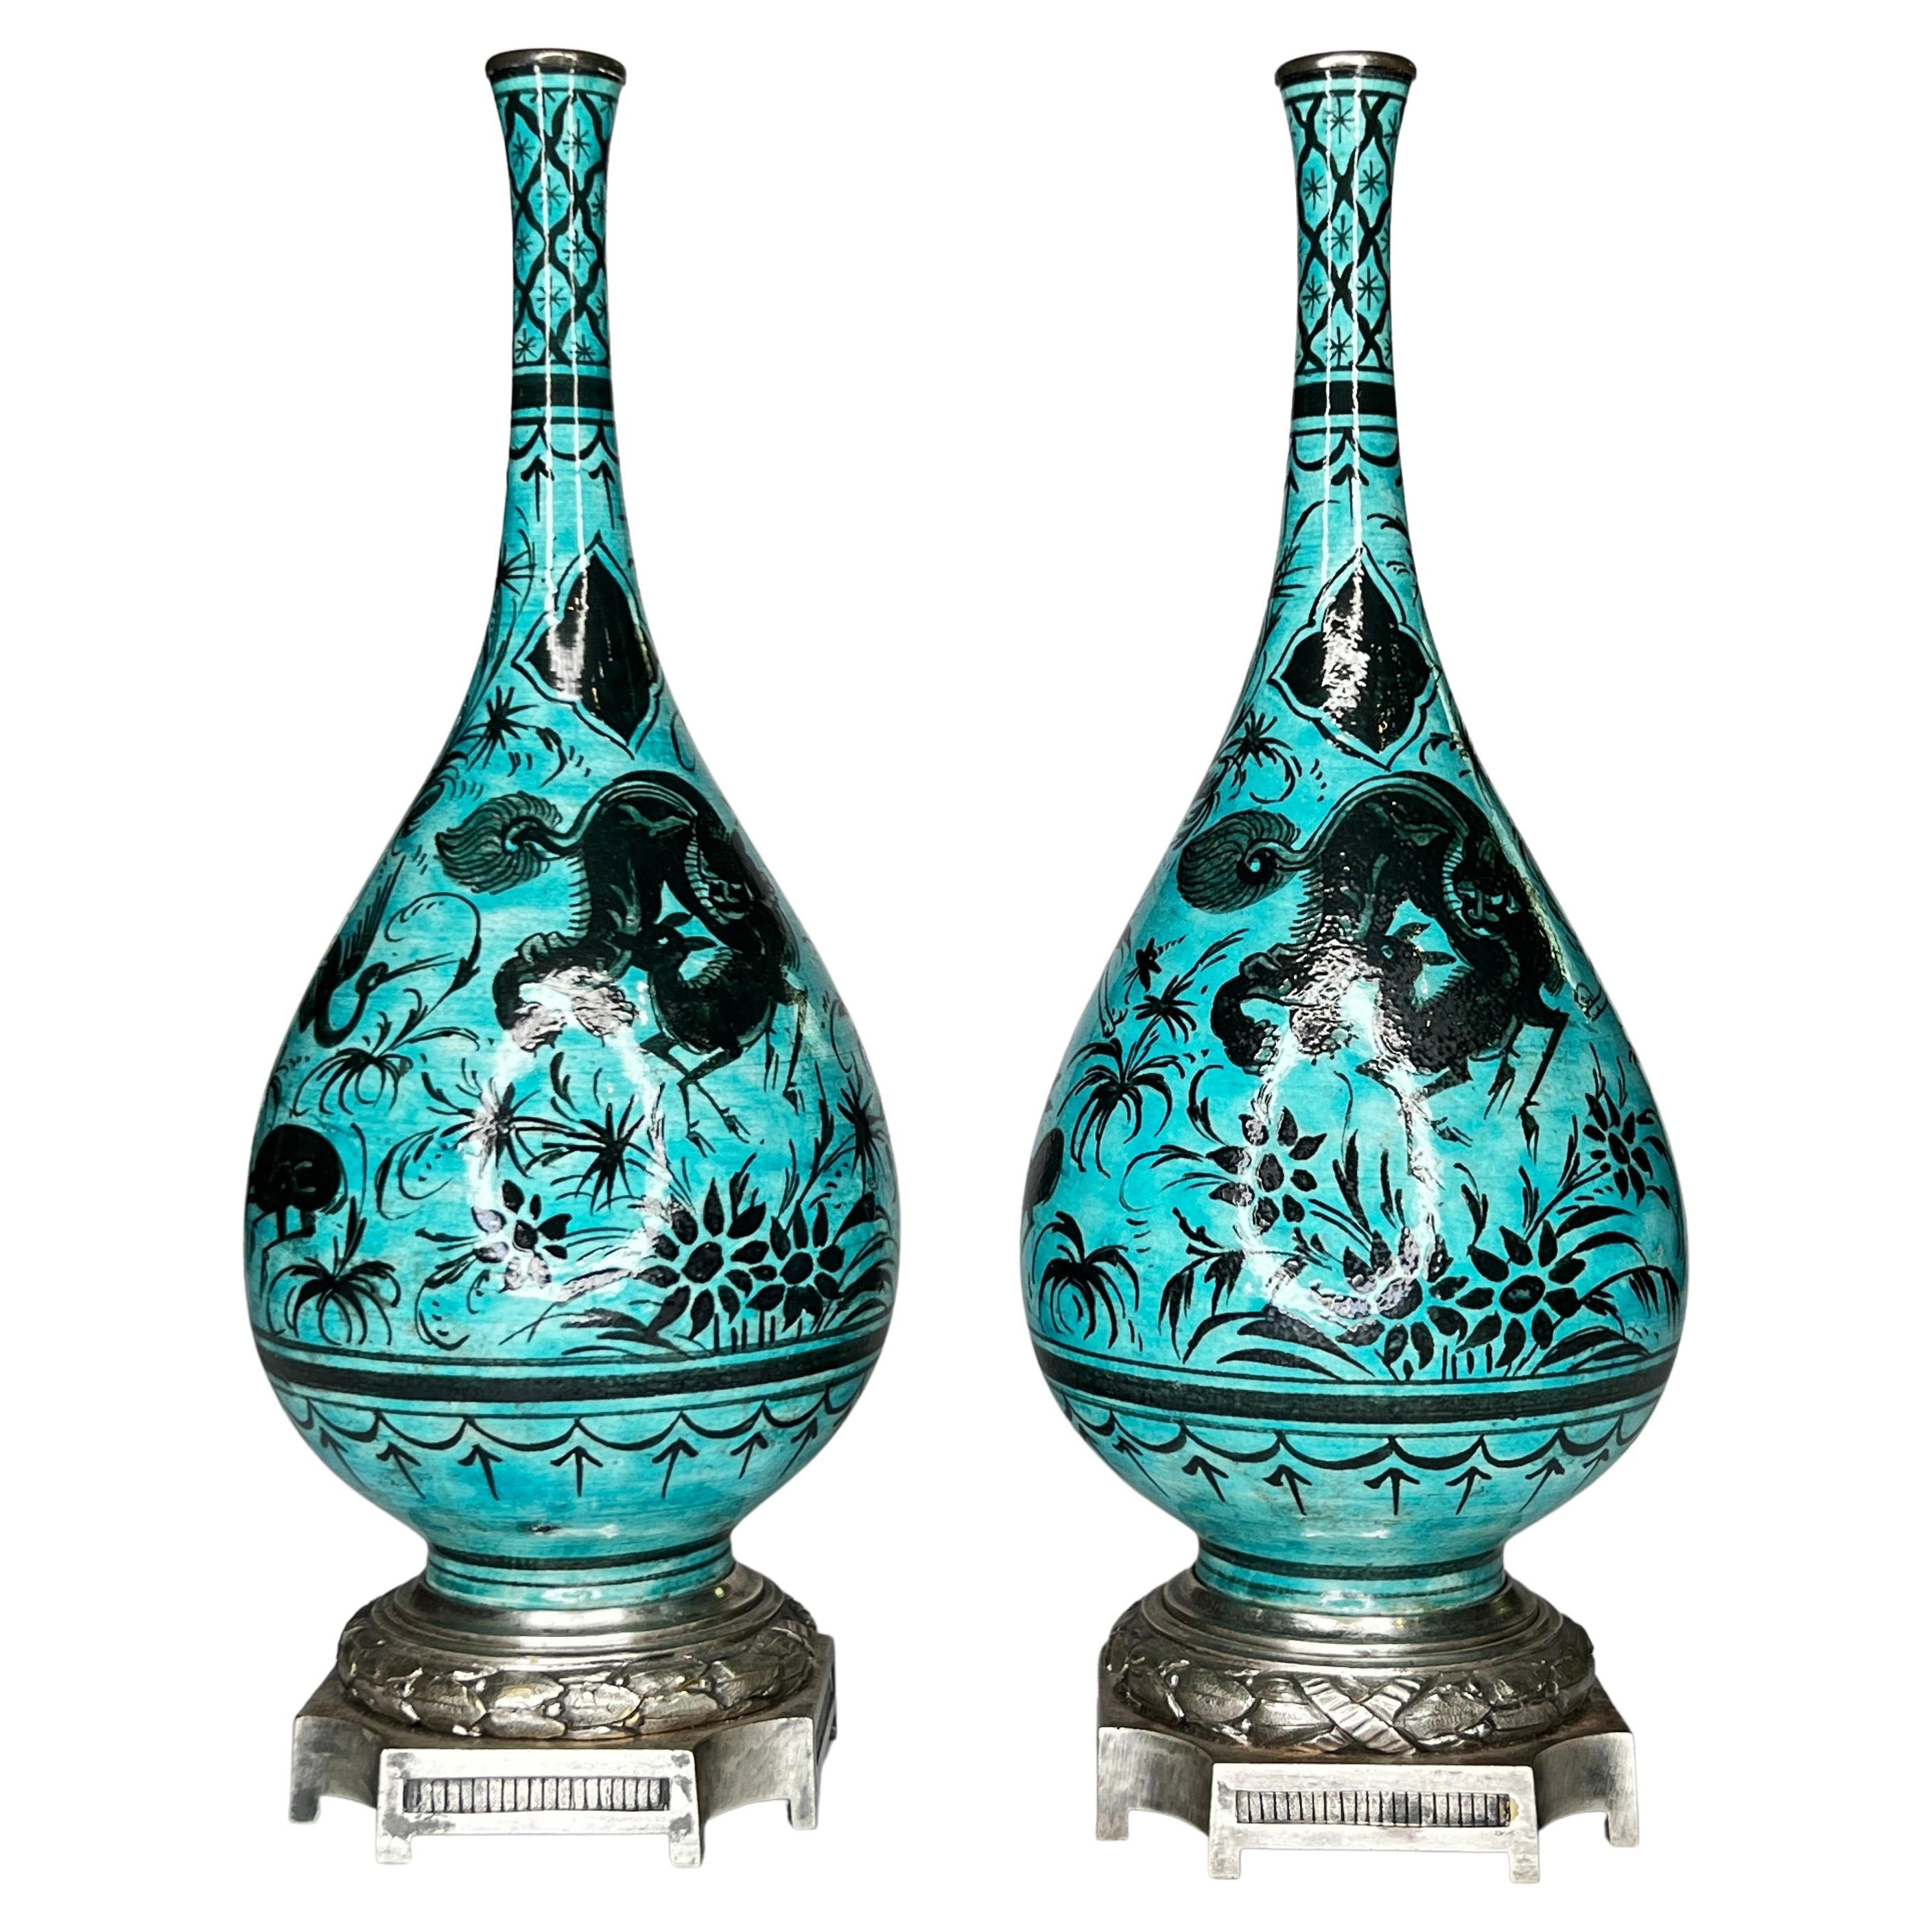 Persian Ware Ceramic Bottle Vases Attributed to Samson et Cie